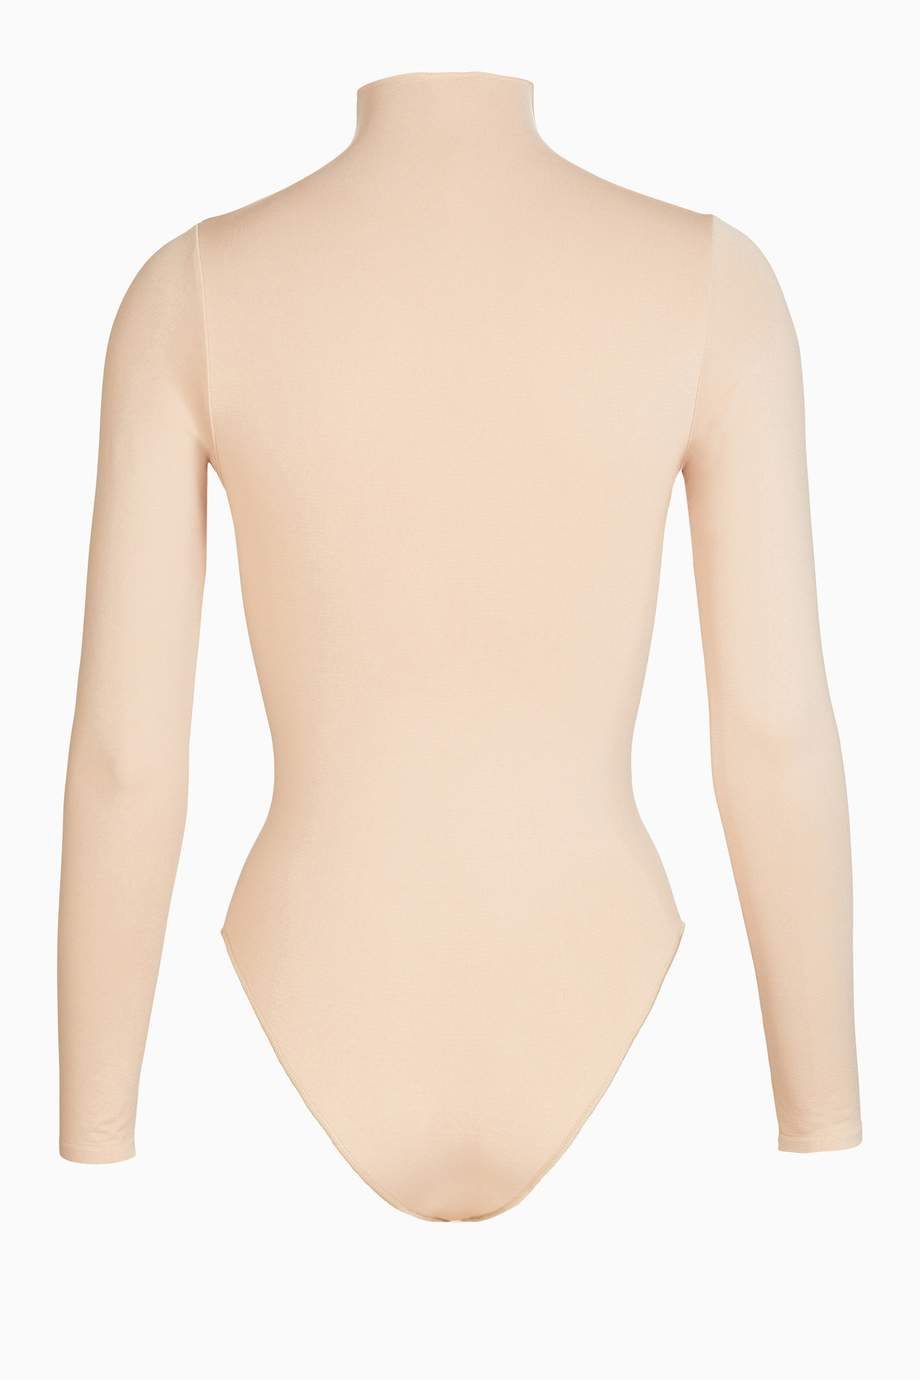 Shop Skims SANDSTONE Essential Mock Neck Long Sleeve Bodysuit for Women